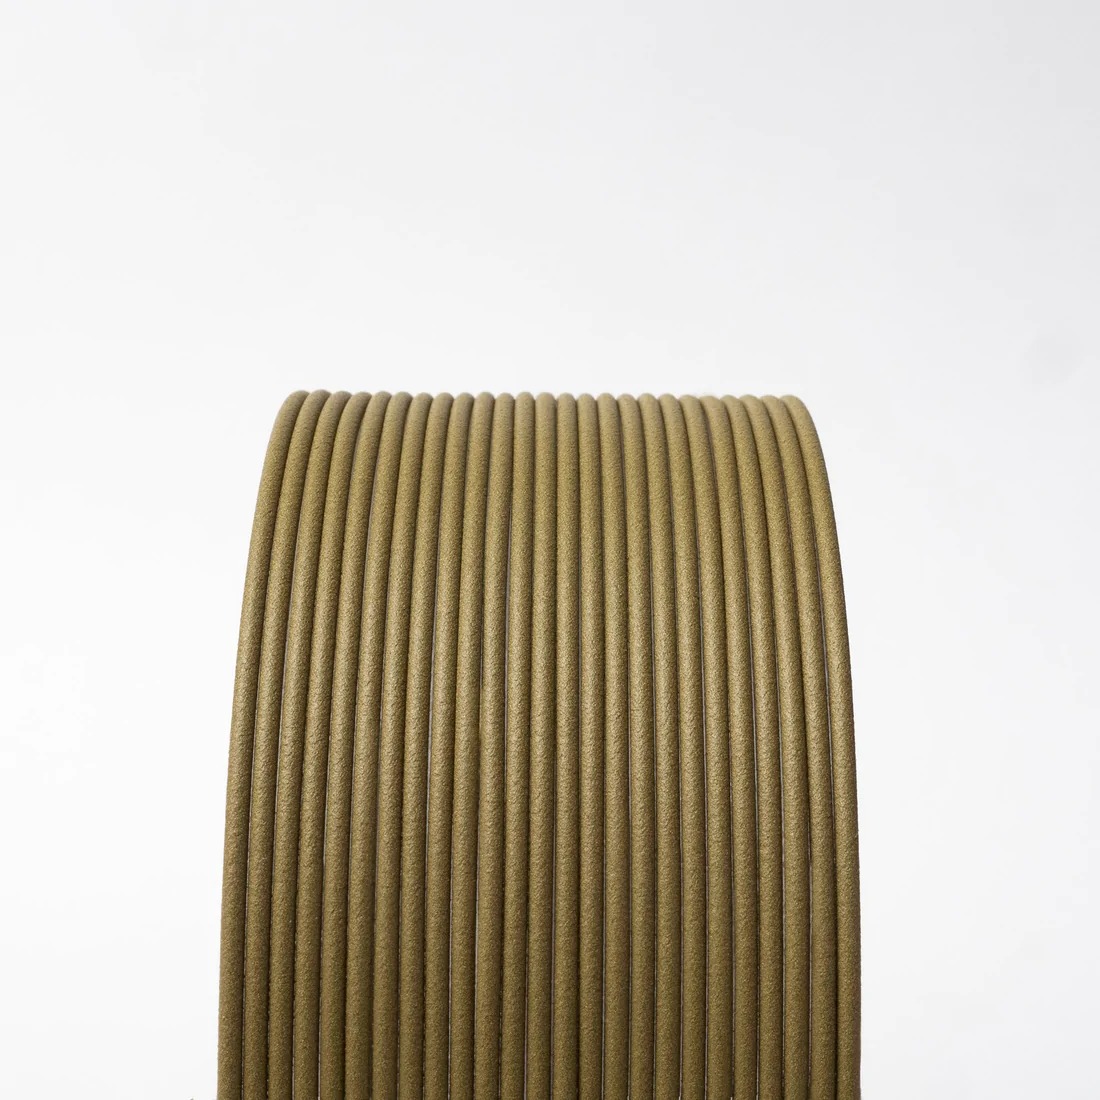 Proto-Pasta Brass Filled Composite PLA 1.75mm 3D printer filament